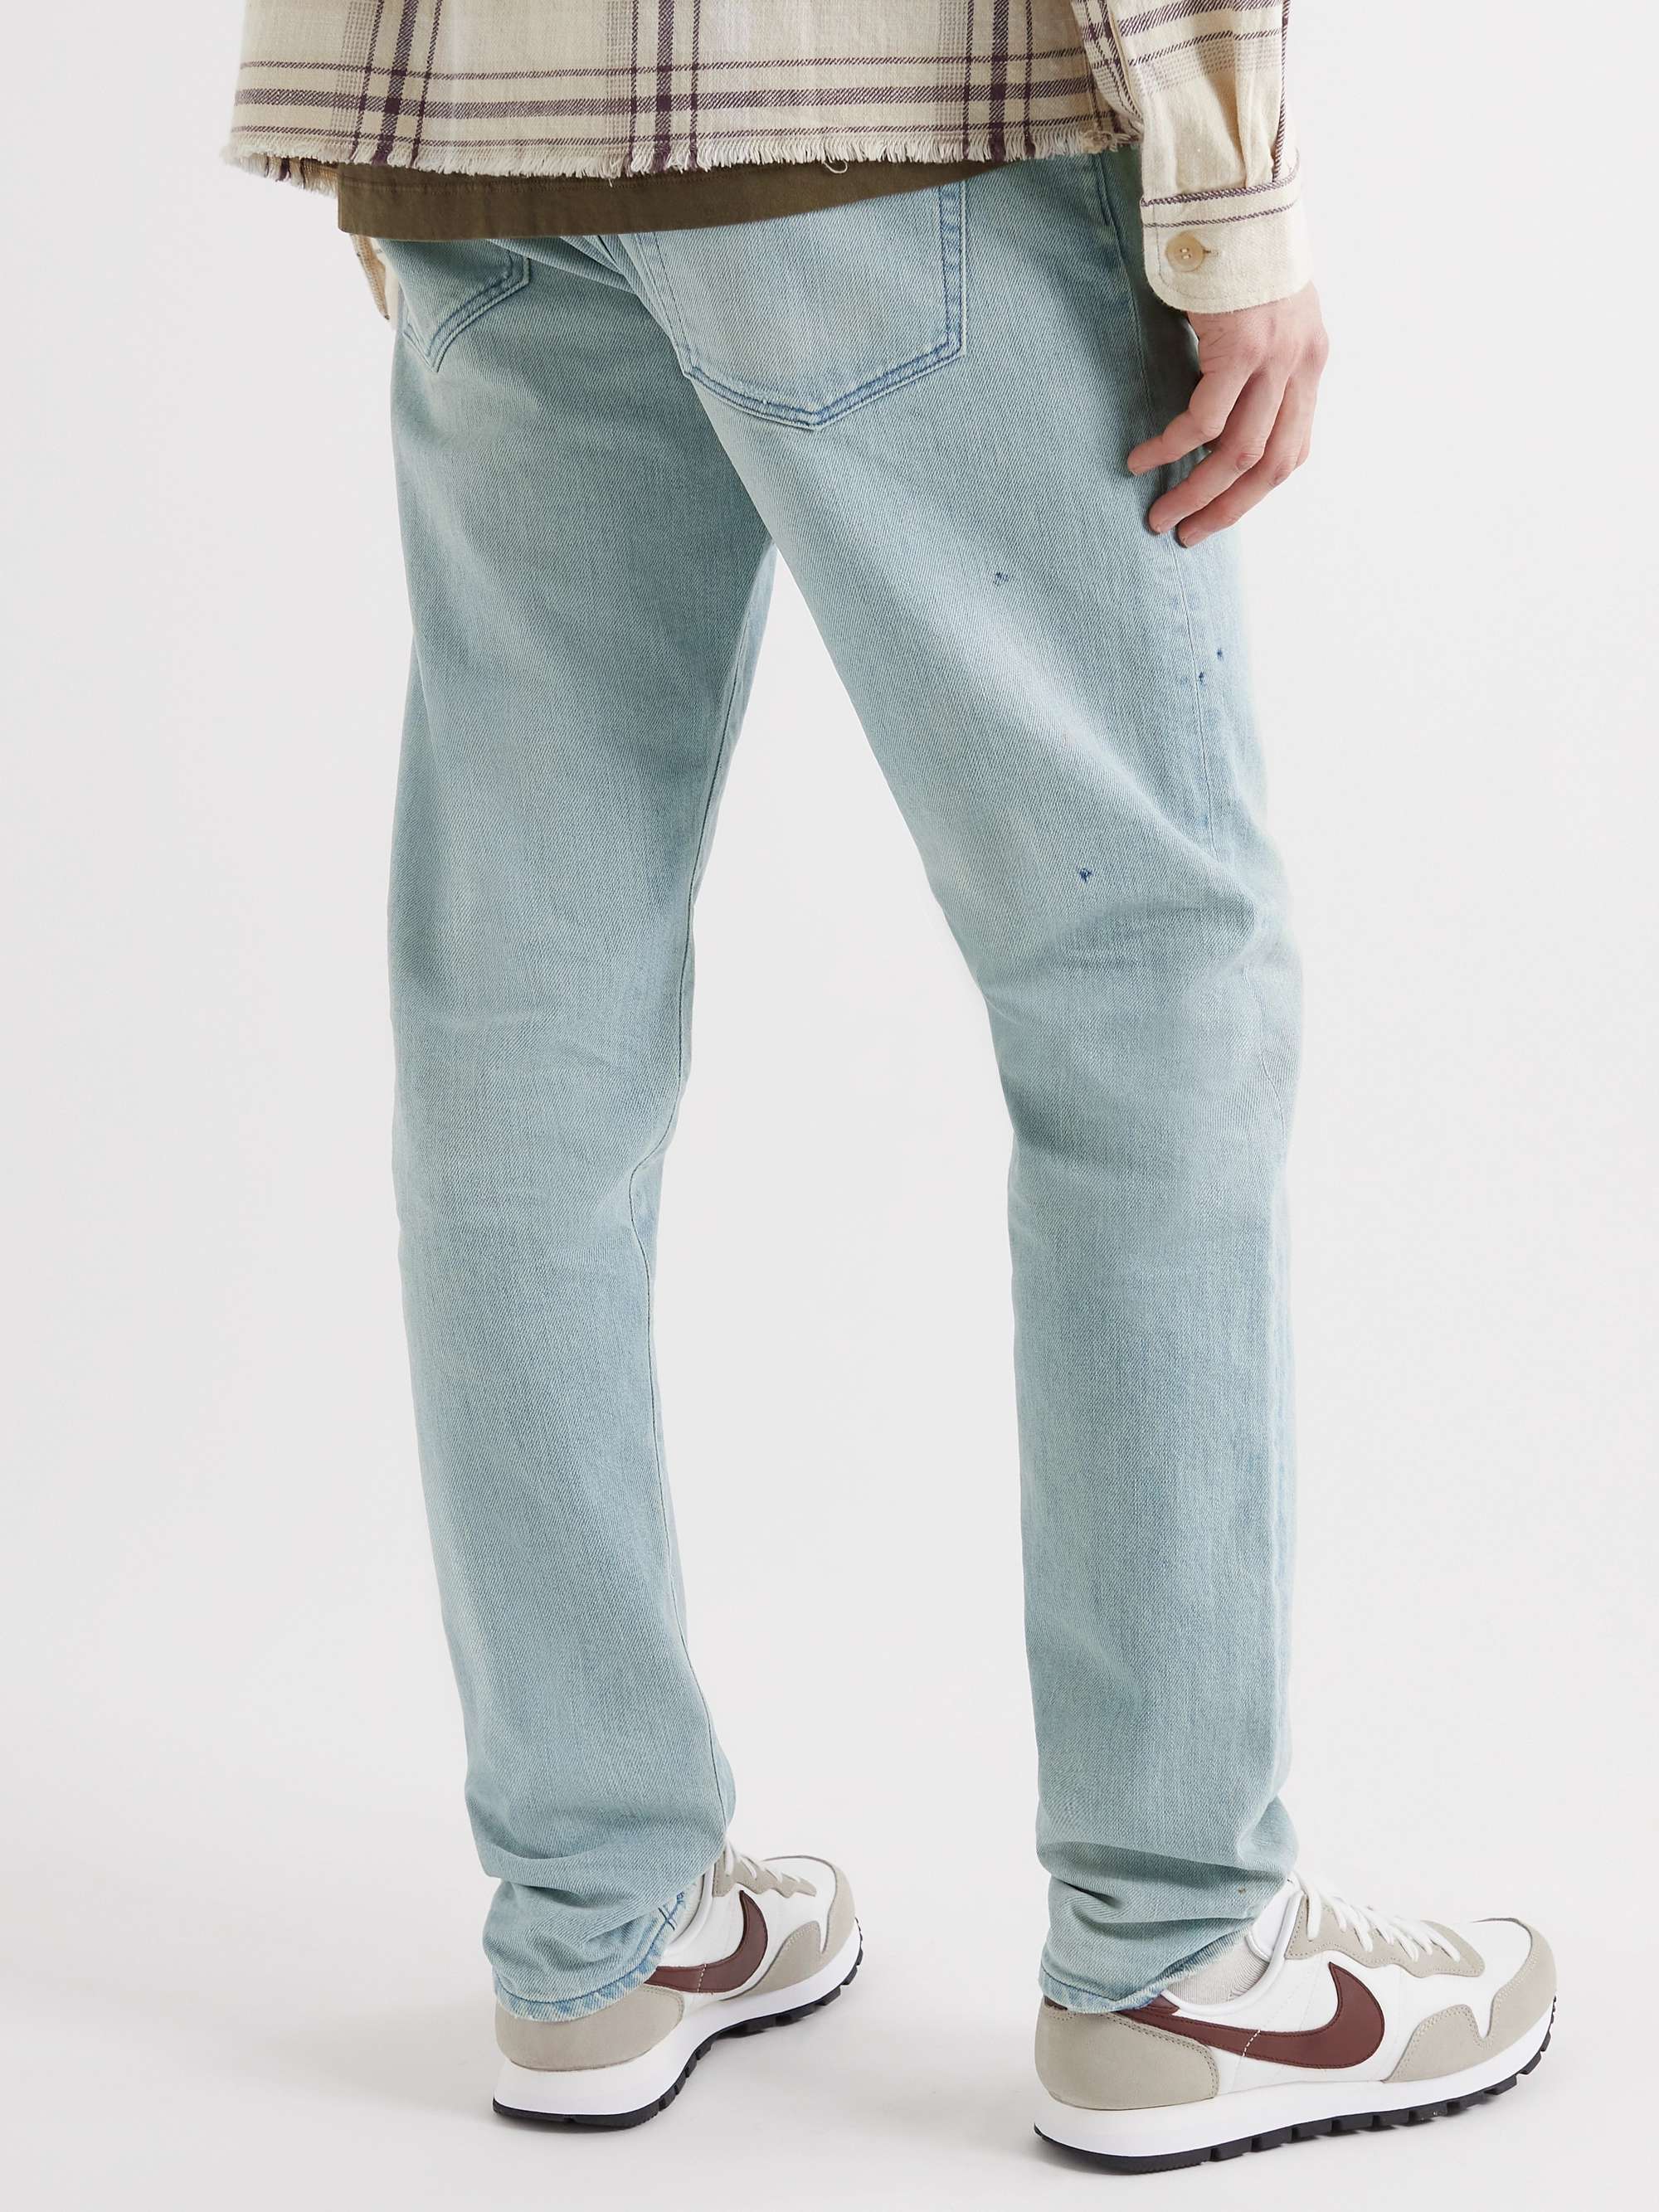 JOHN ELLIOTT The Cast 2 Slim-Fit Distressed Jeans